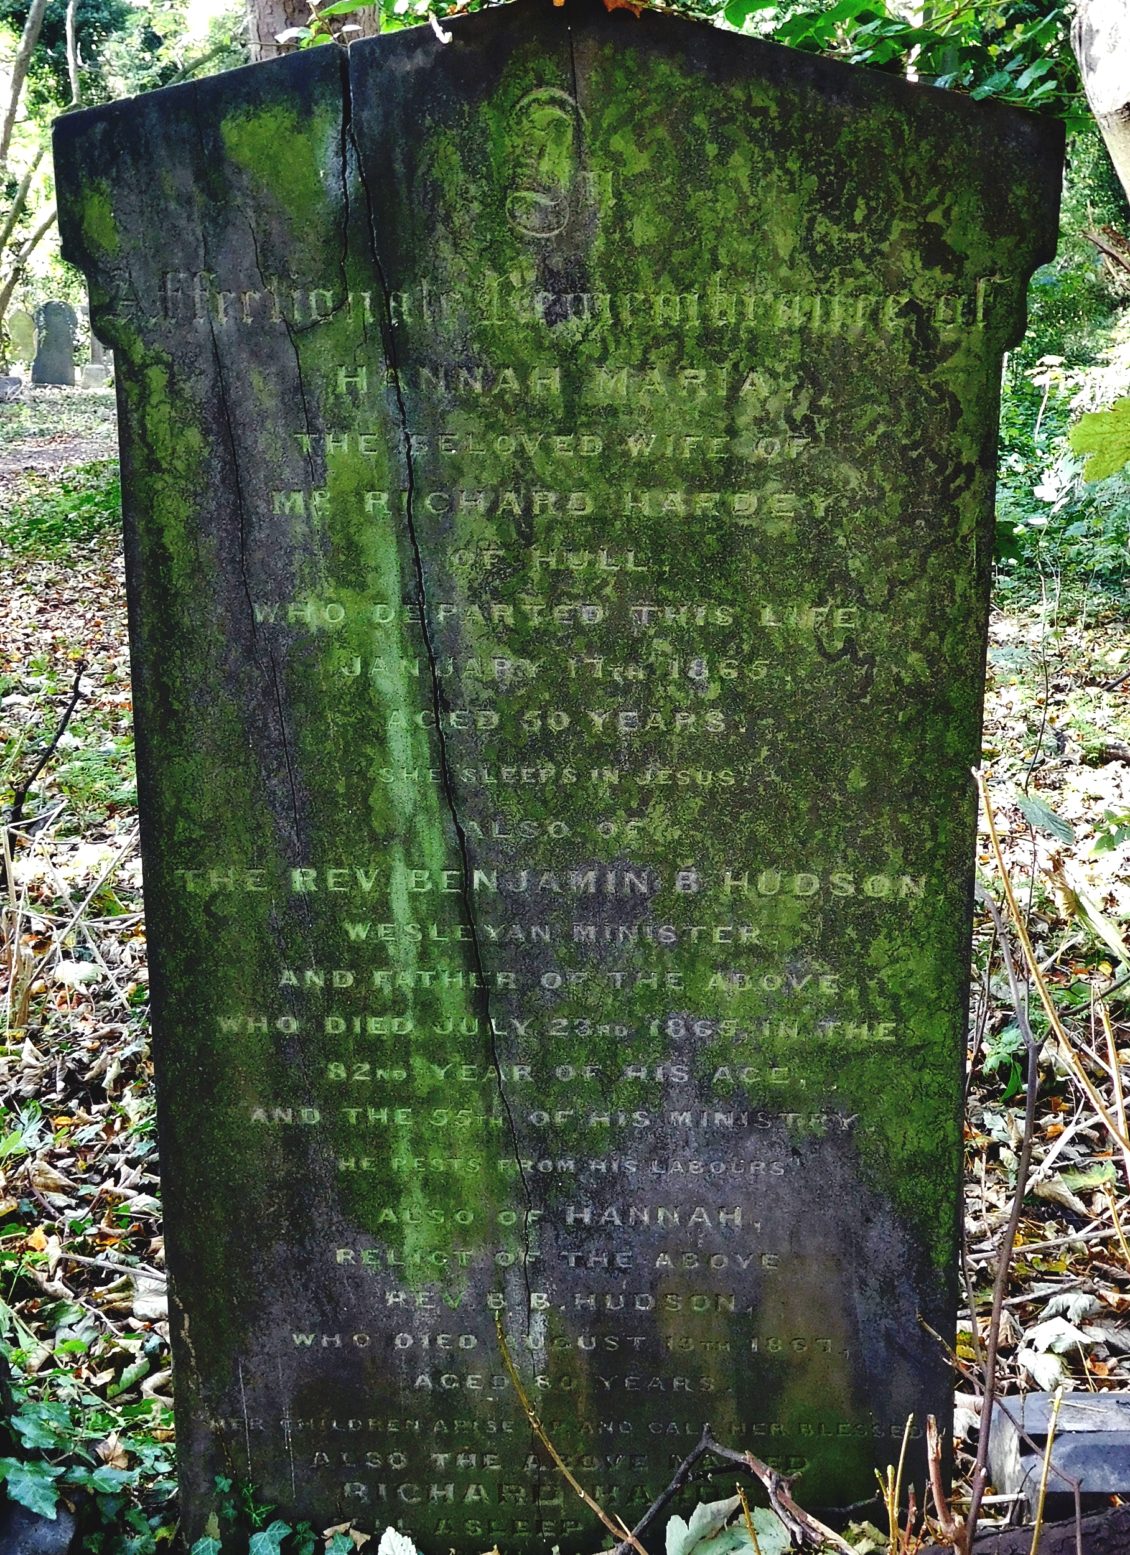 The Hardey's headstone